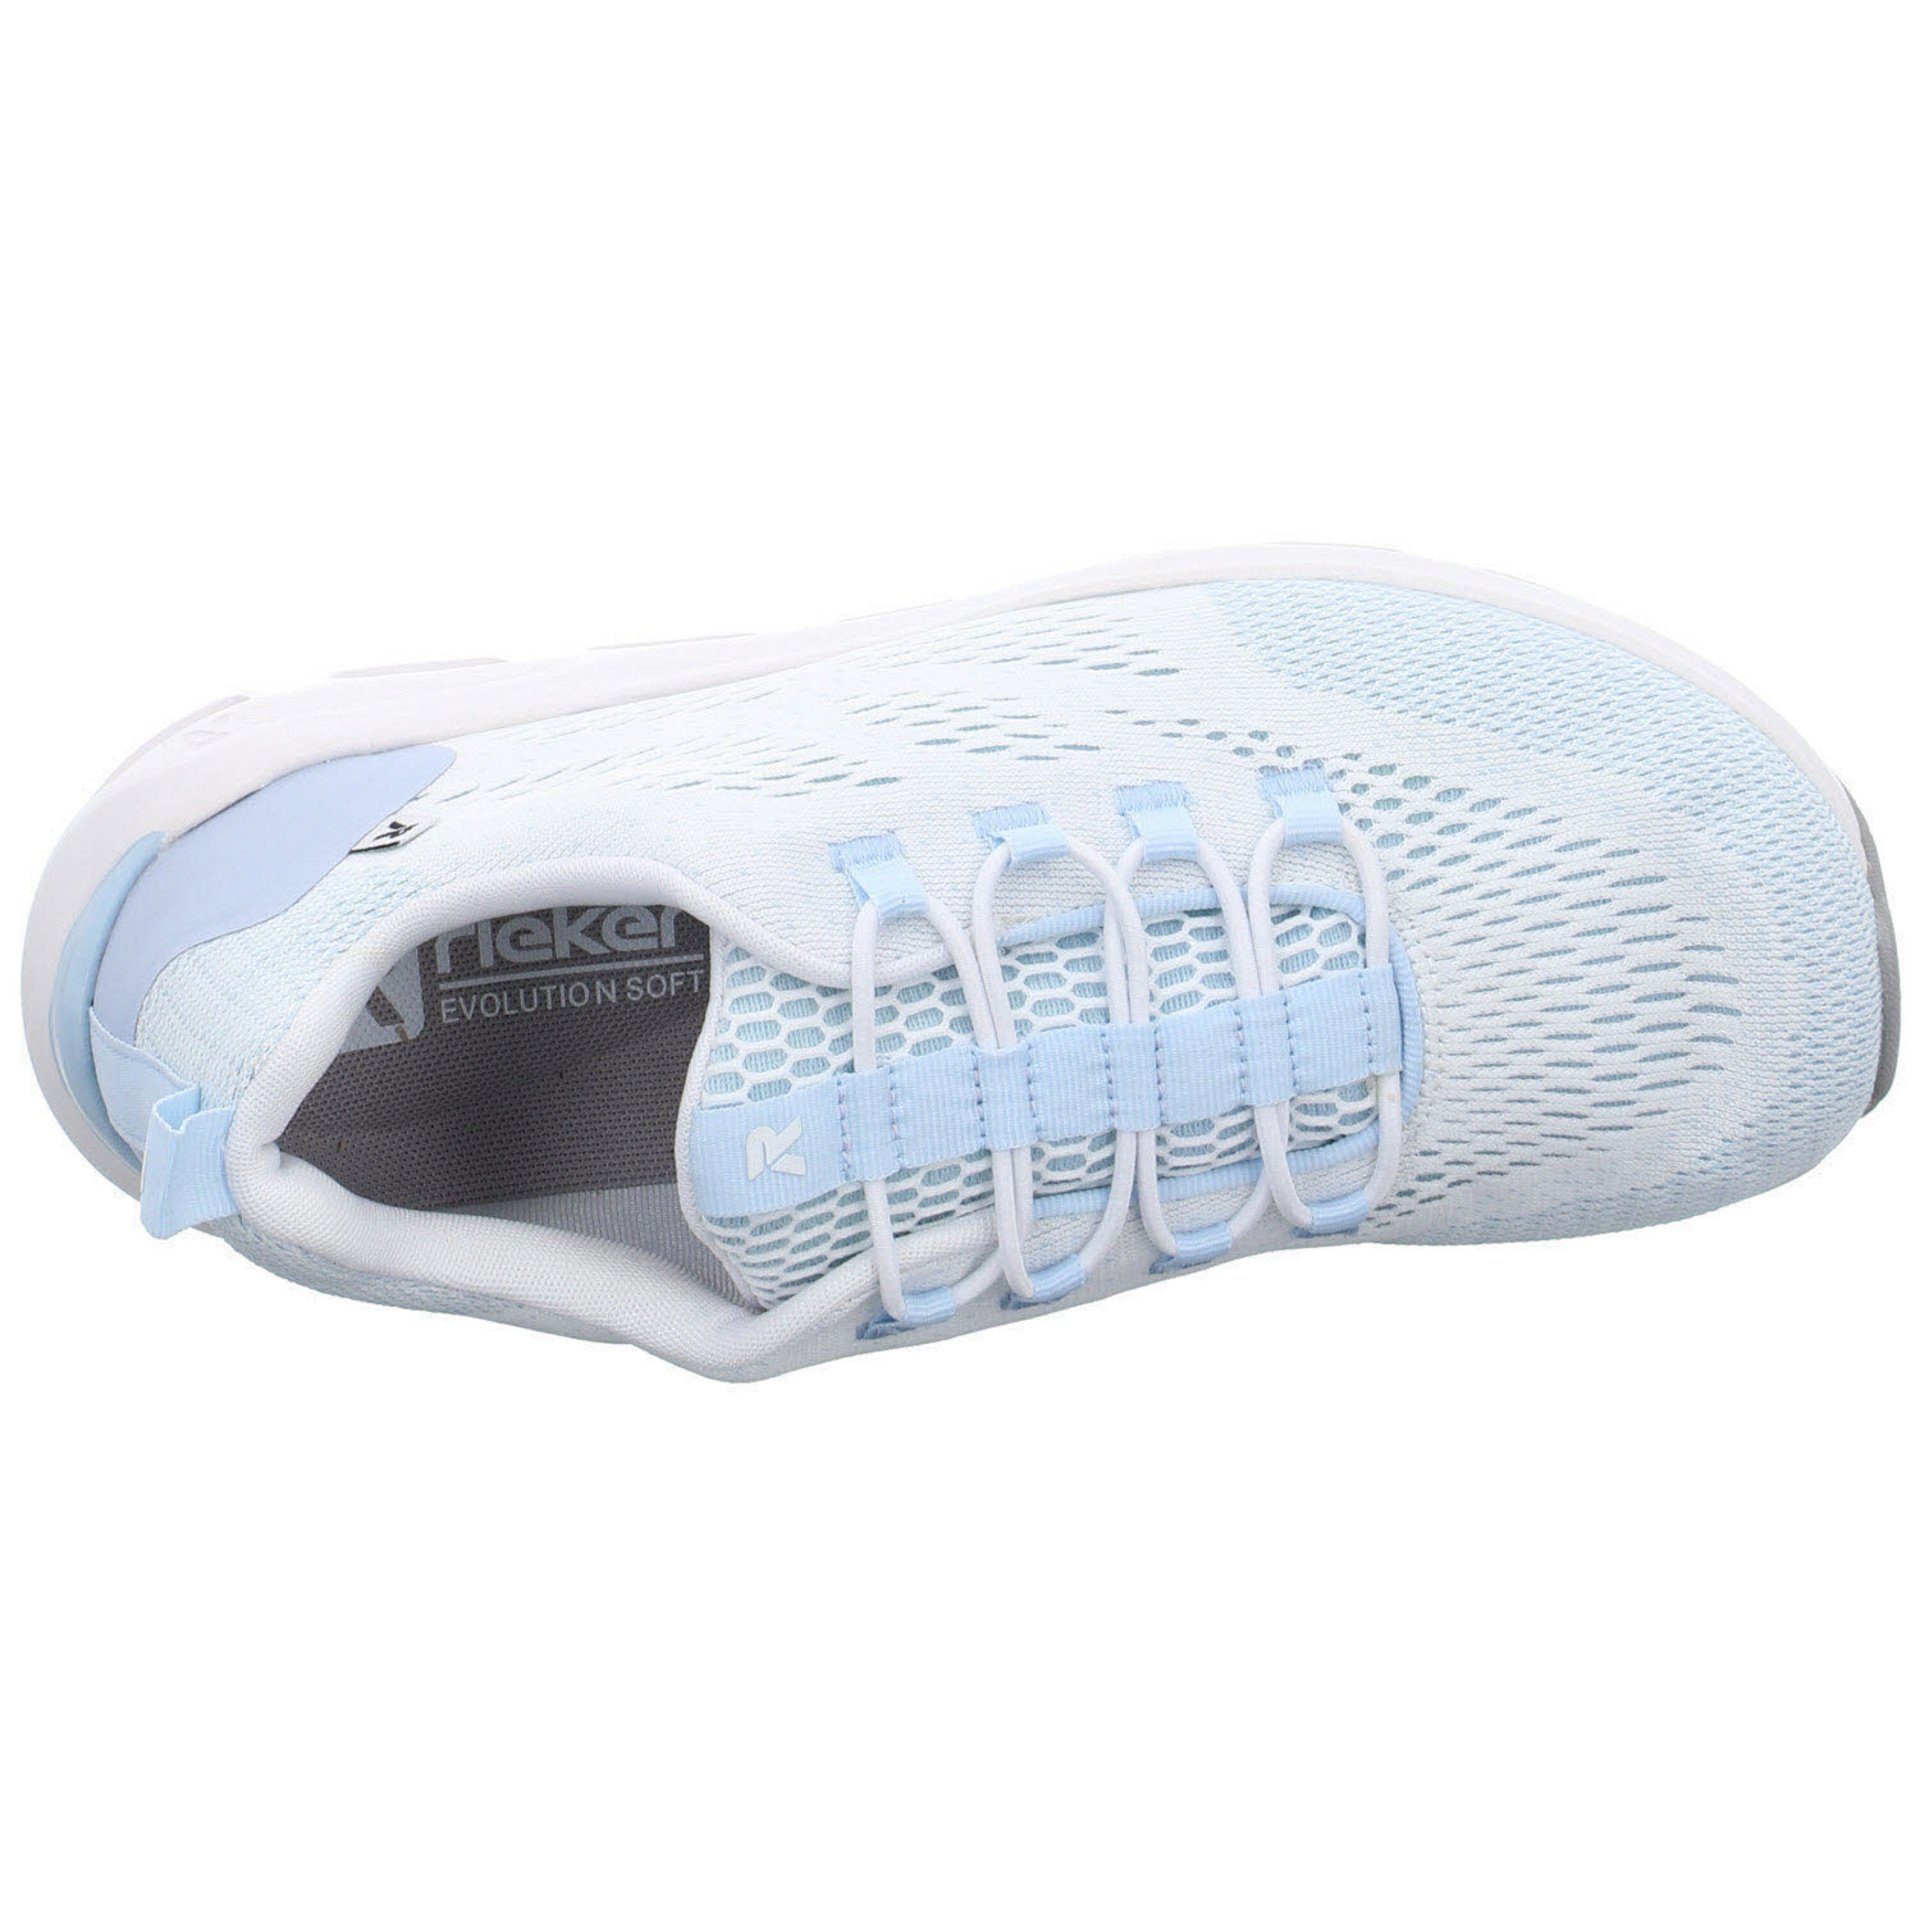 sportweiss-ciel/ciel Slip-On Rieker R-Evolution Textil Schuhe Sneaker Slipper Sneaker Damen